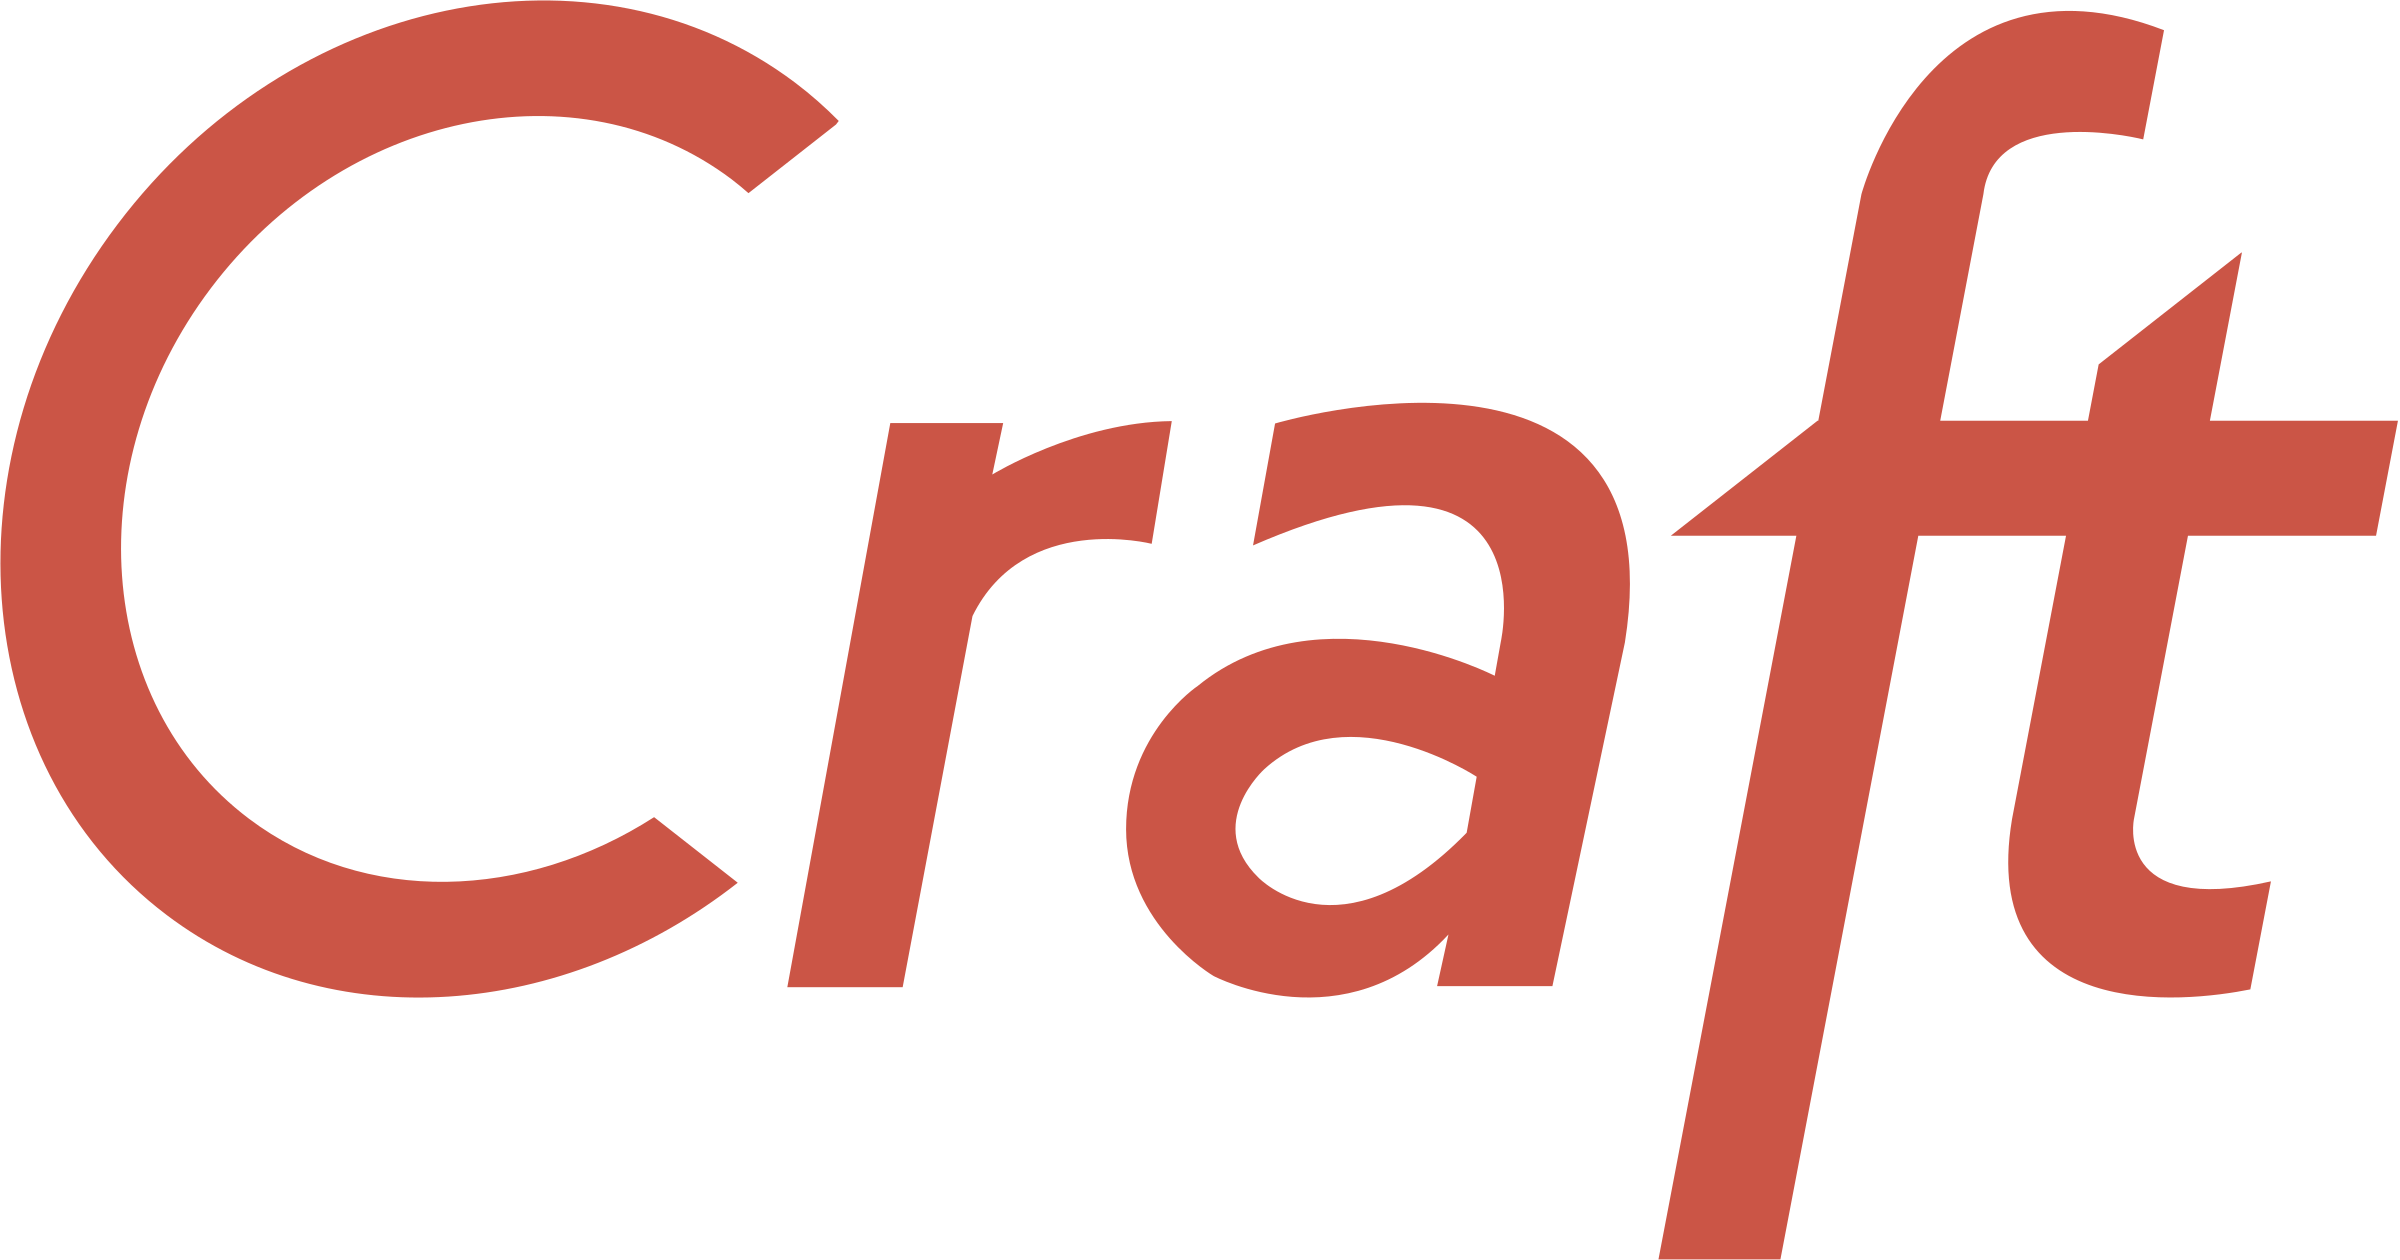 craft clipart svg